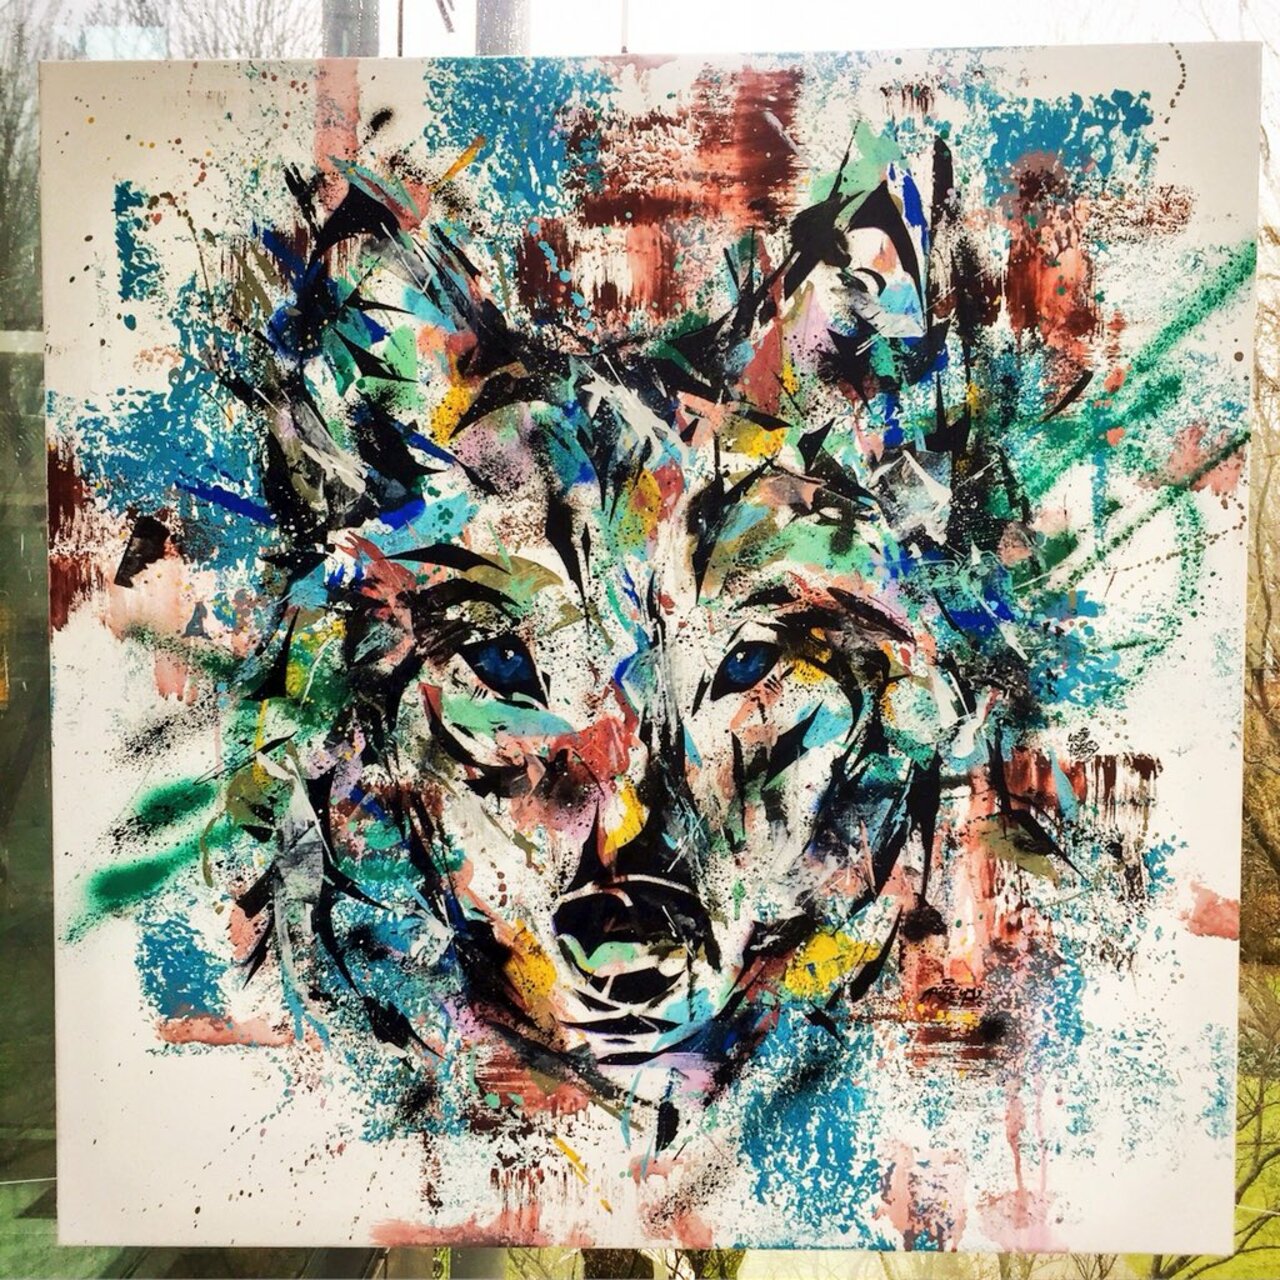 Wolf by #riseup #pochoir #stencil #stencilart #streetart #graffiti #spray #bombing #sprayart #urbanart #nirindastreet https://t.co/LtVreg57ZD